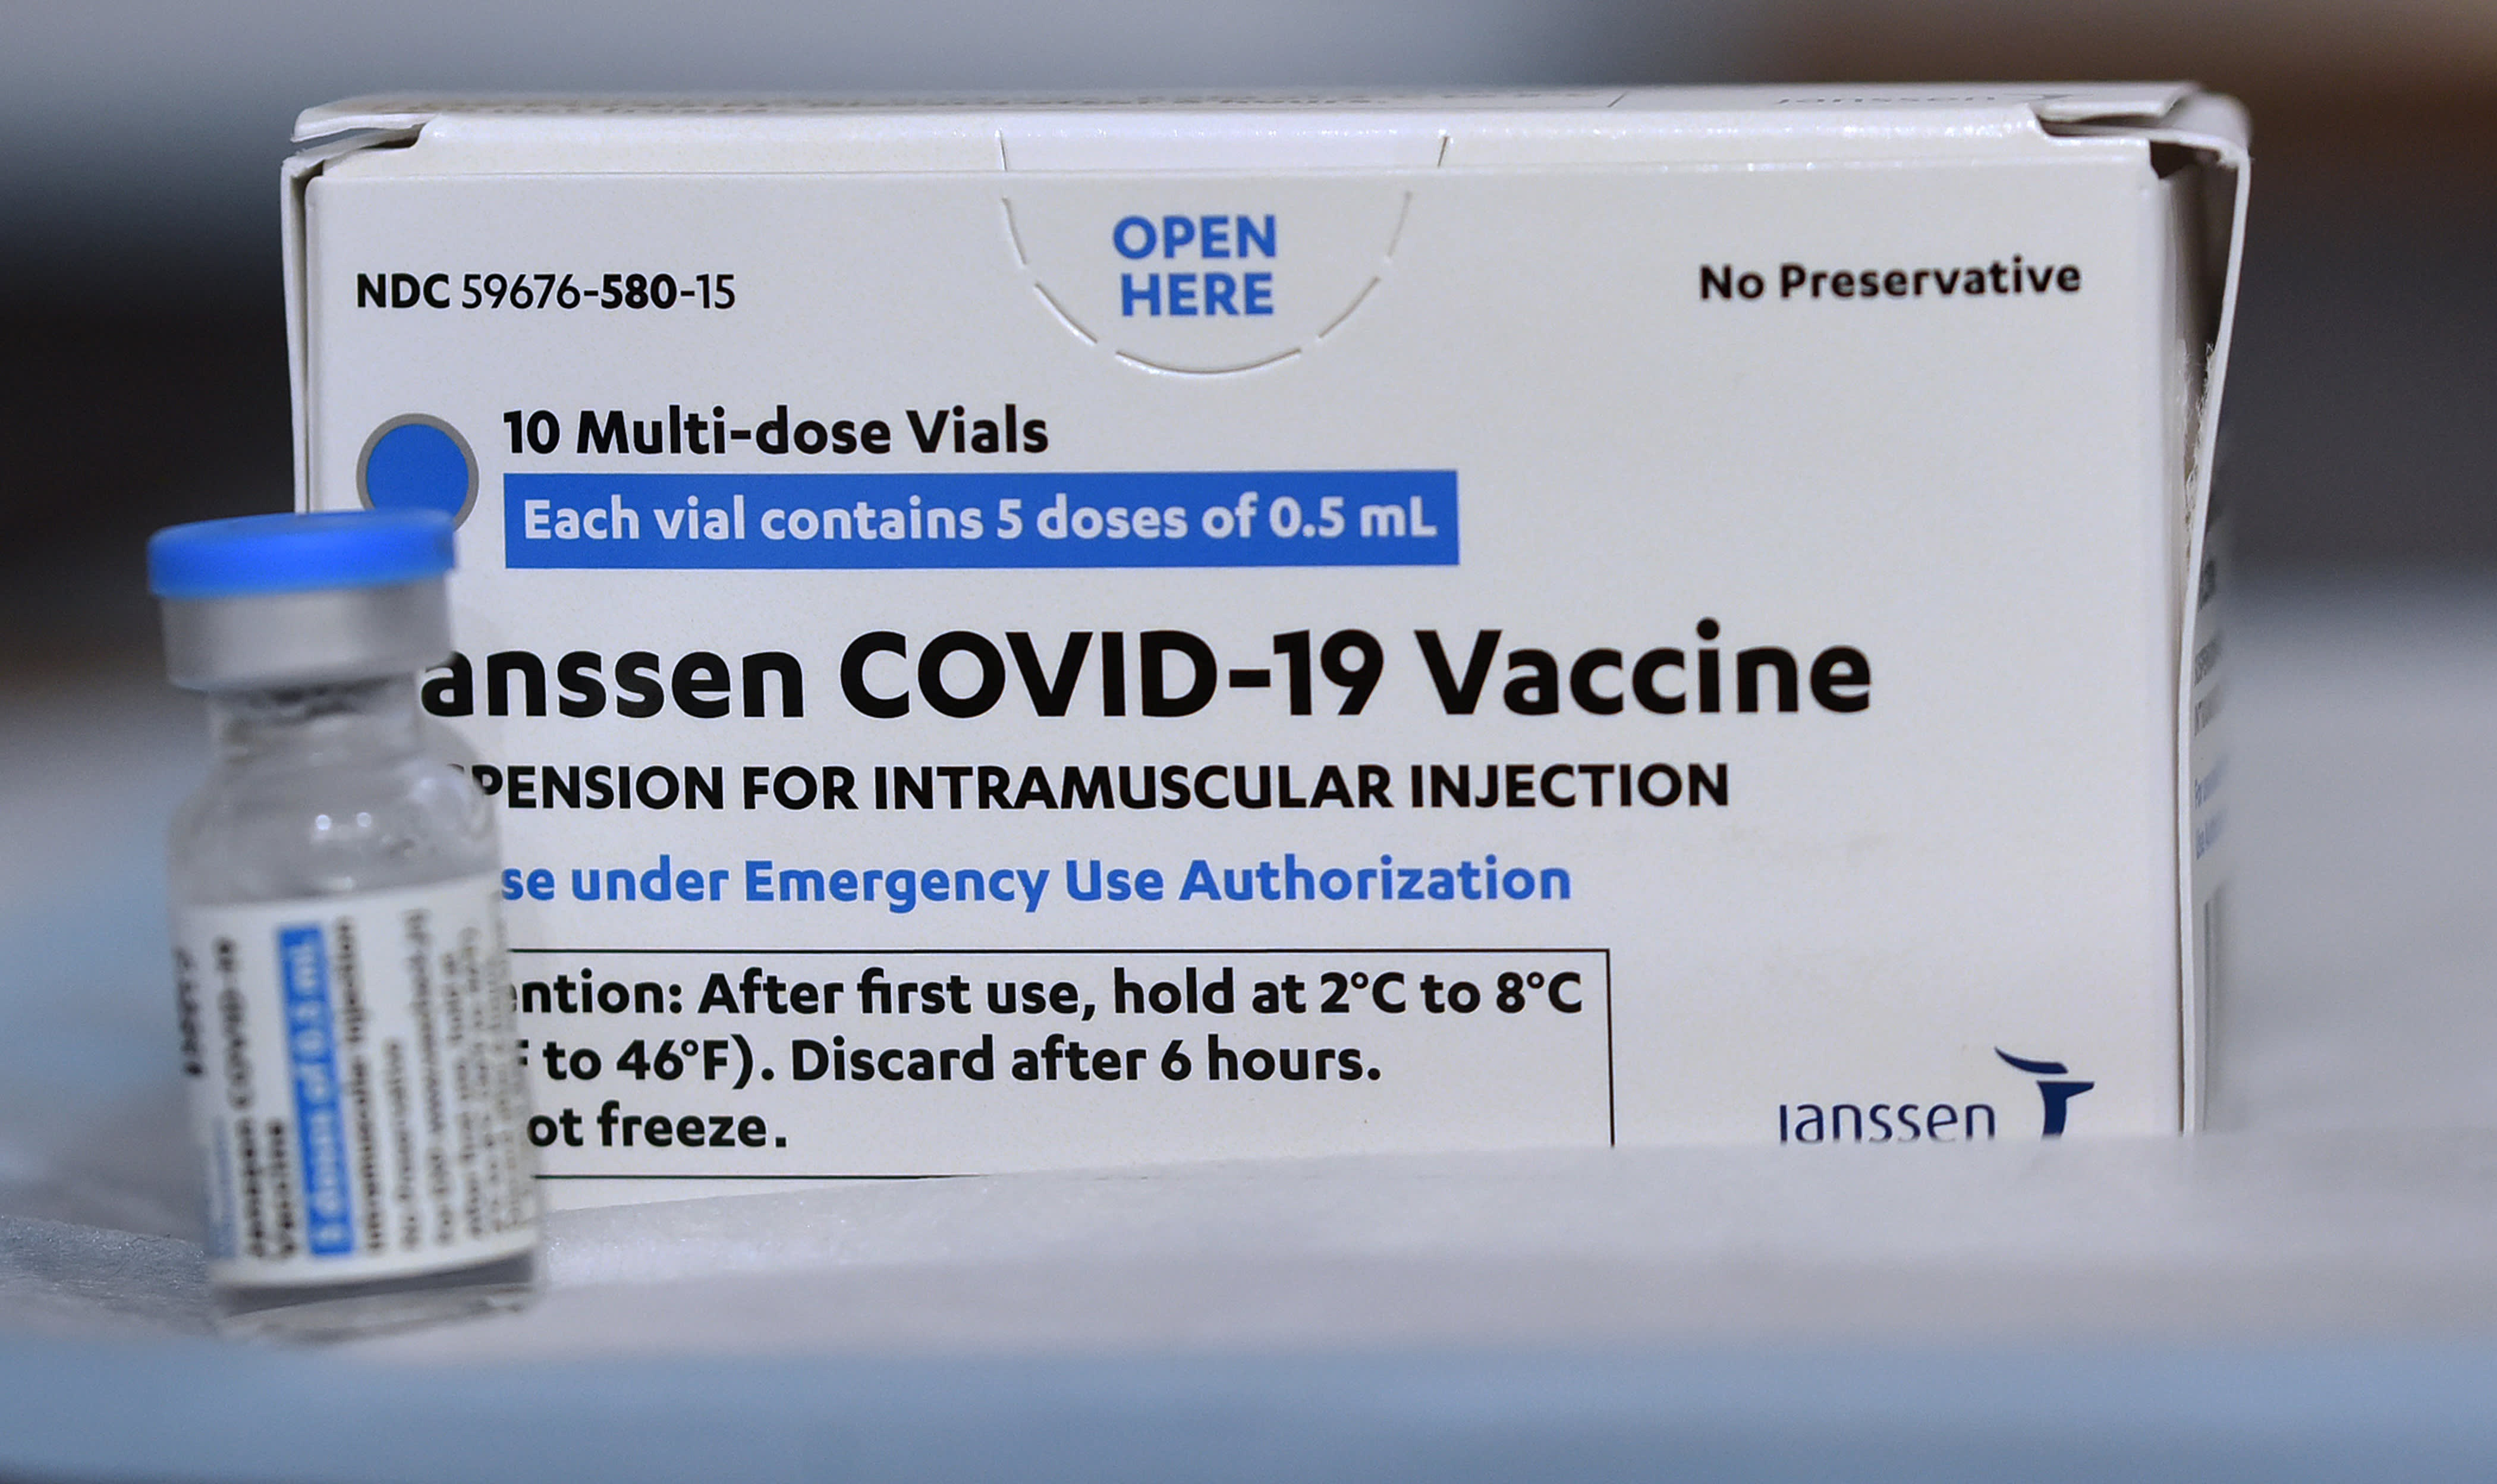 FDA temporarily suspends Johnson & Johnson vaccine due to rare blood clotting problems